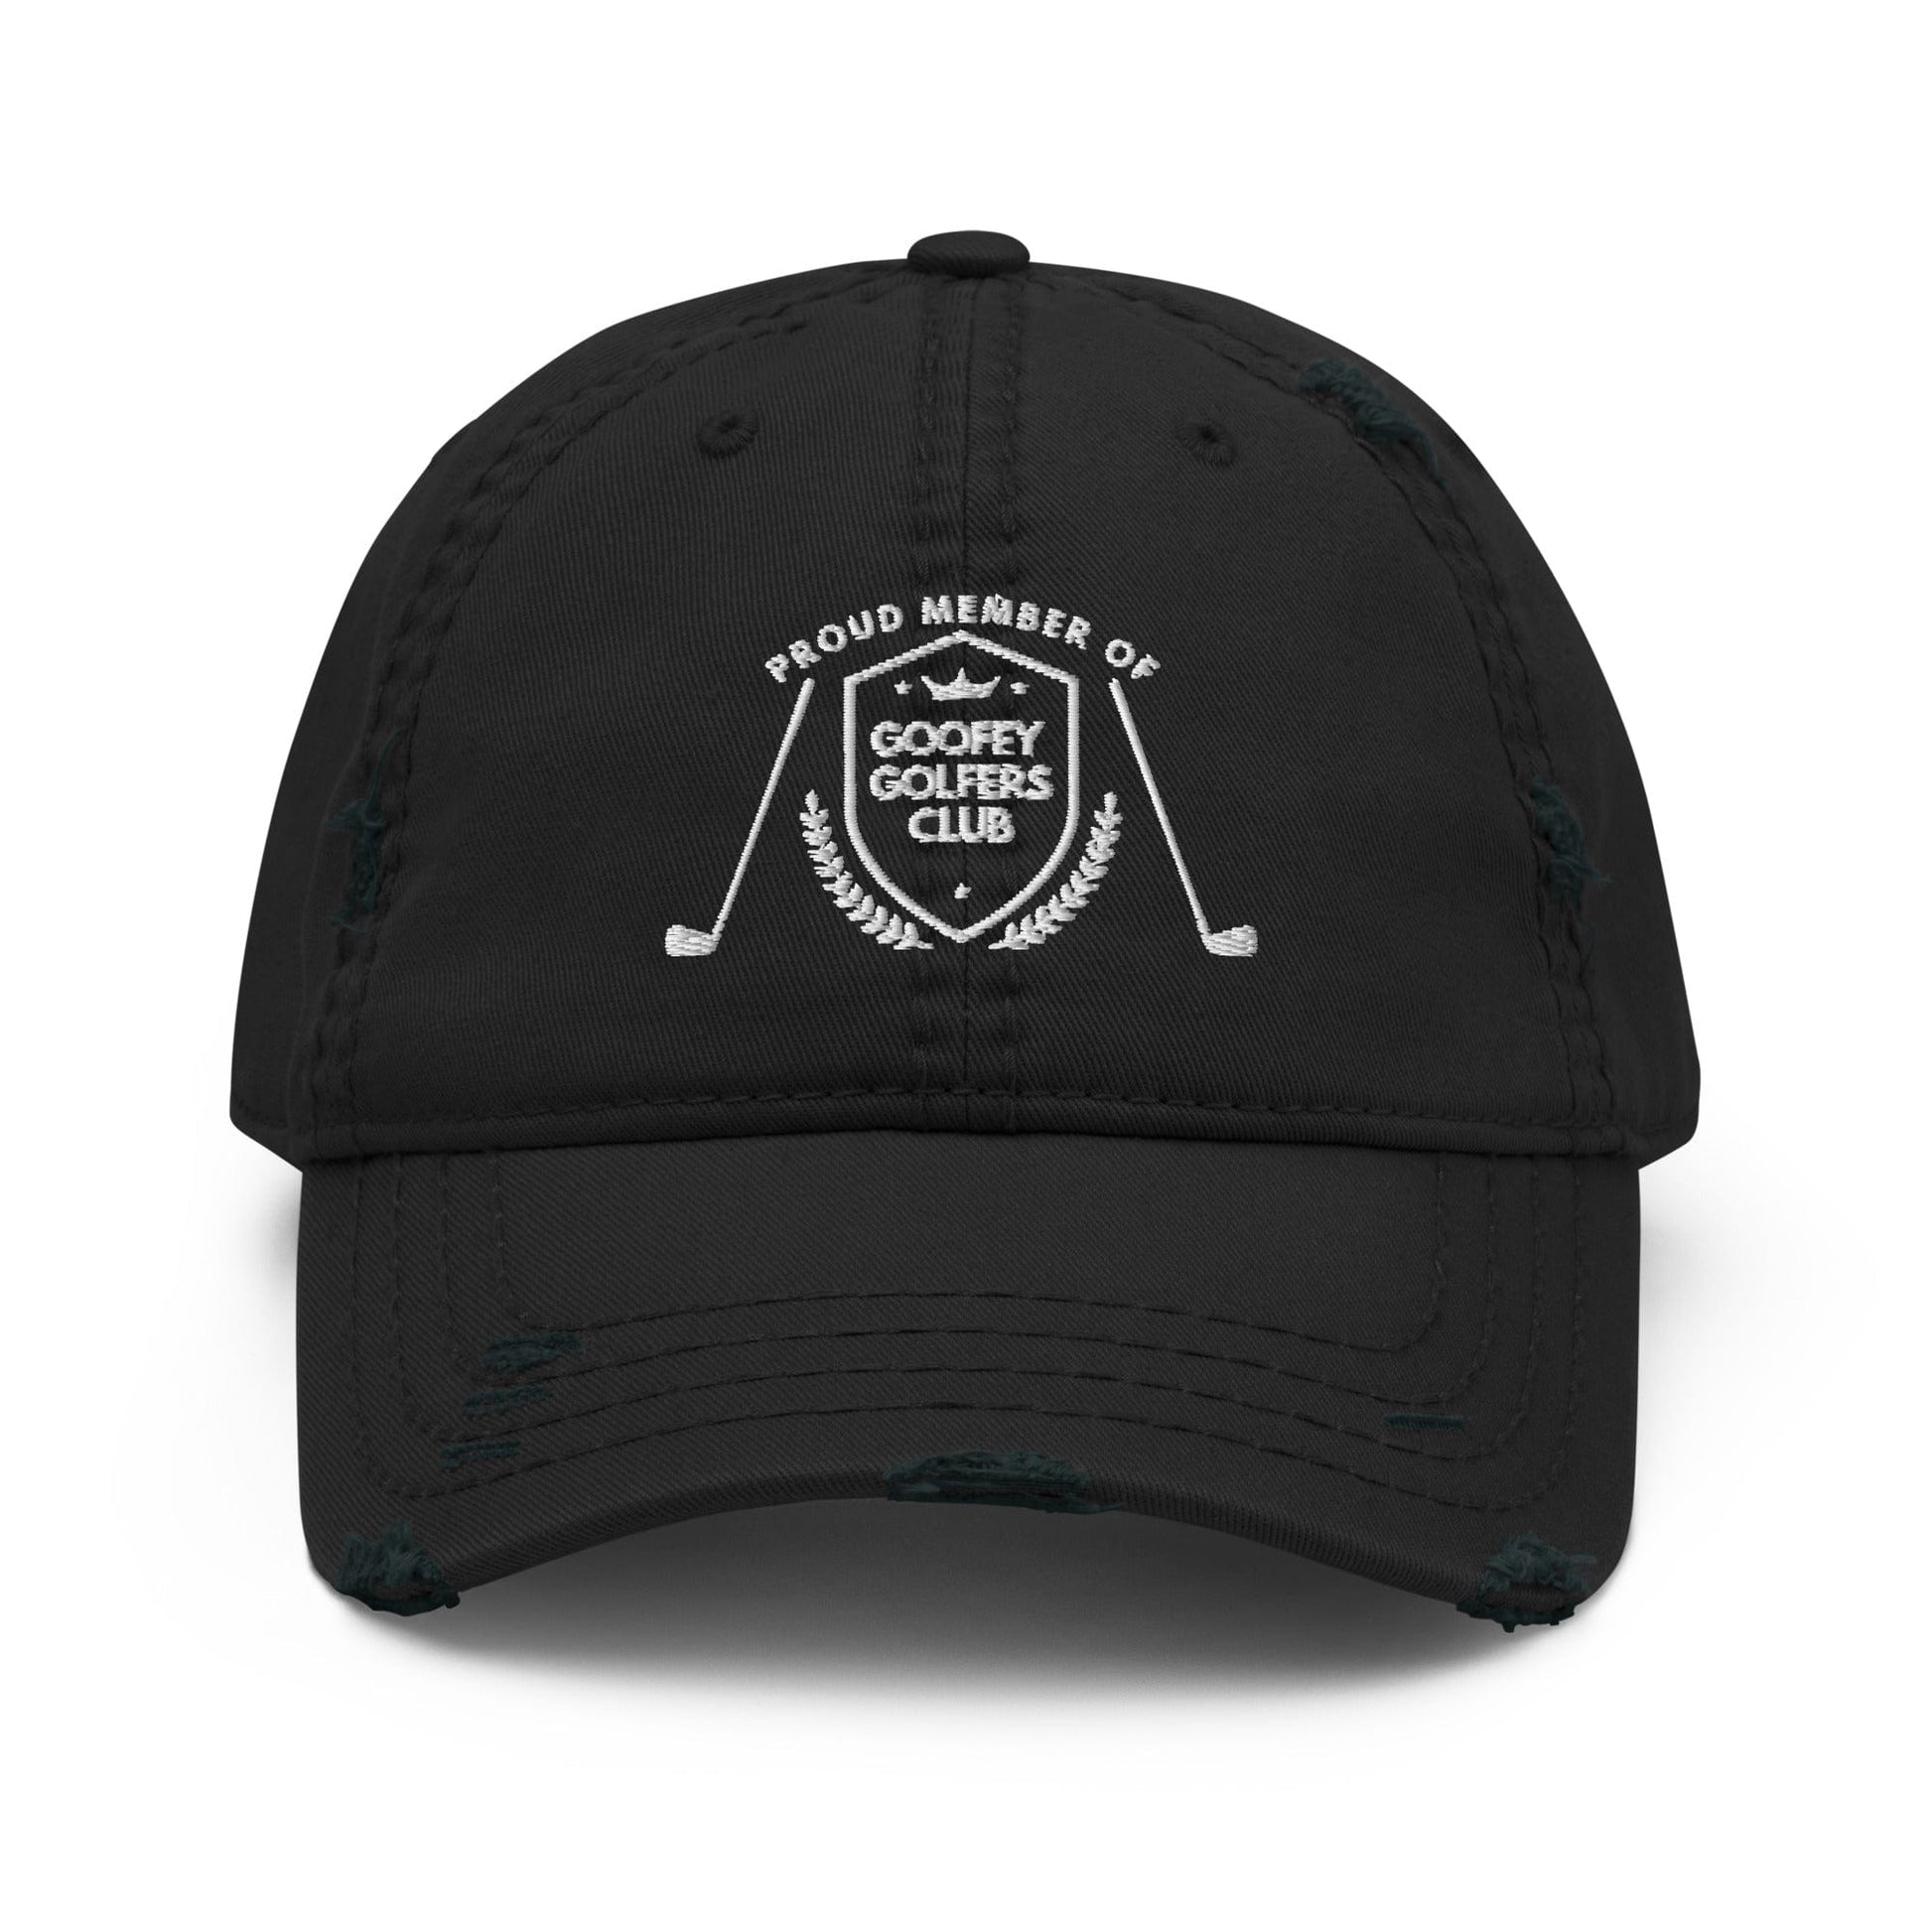 Funny Golfer Gifts  Distressed Cap Black Goofey Golfers Club Distressed Hat